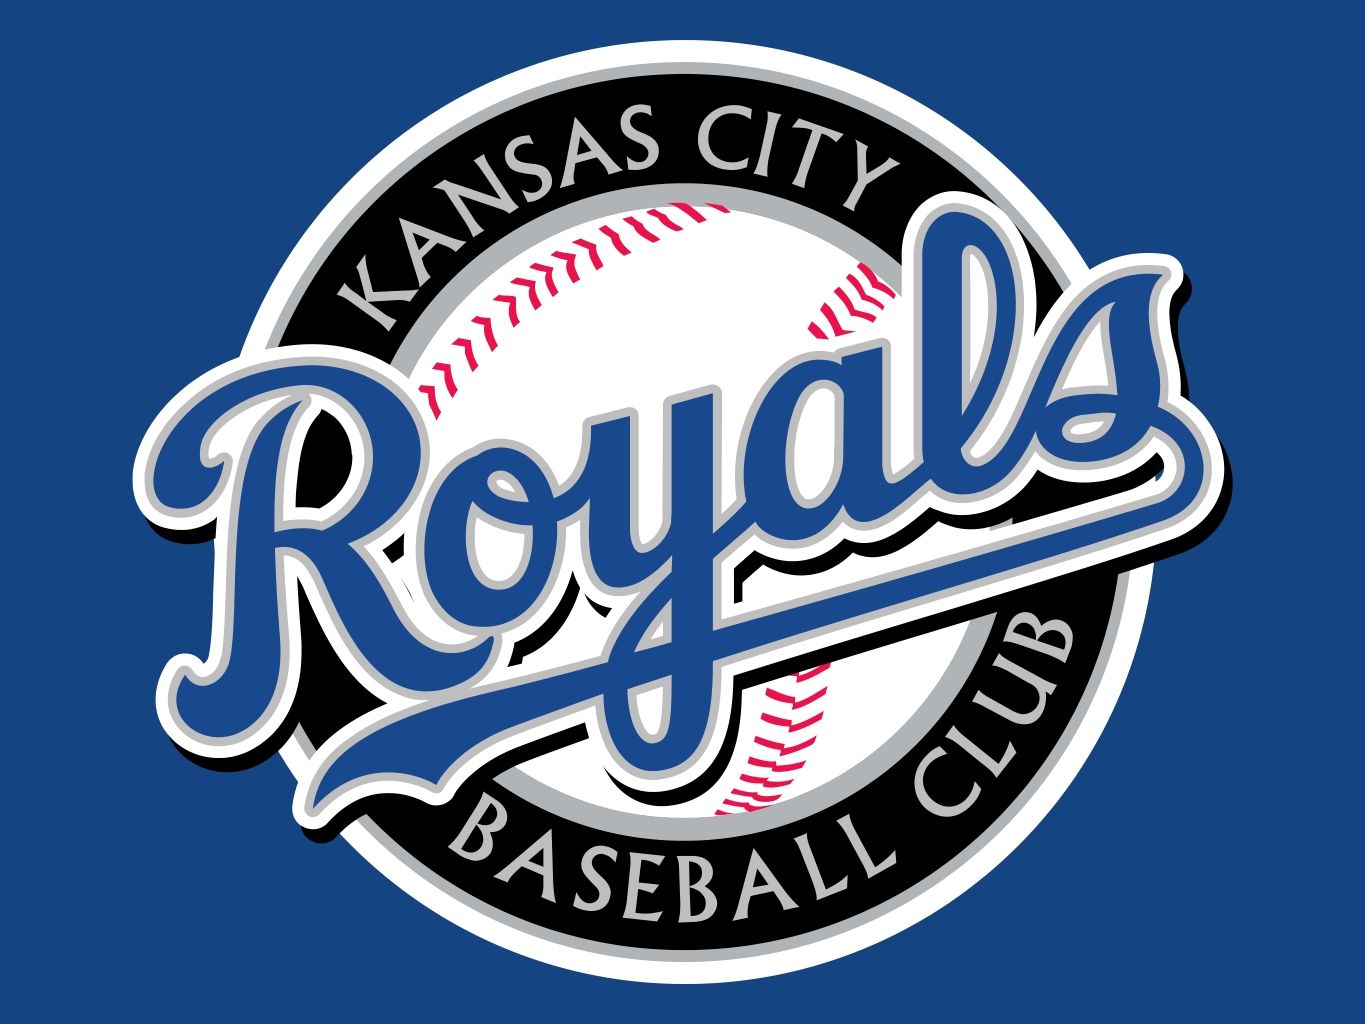 Kansas City Royals vs. New York Mets tickets, Kansas, Texas, United States